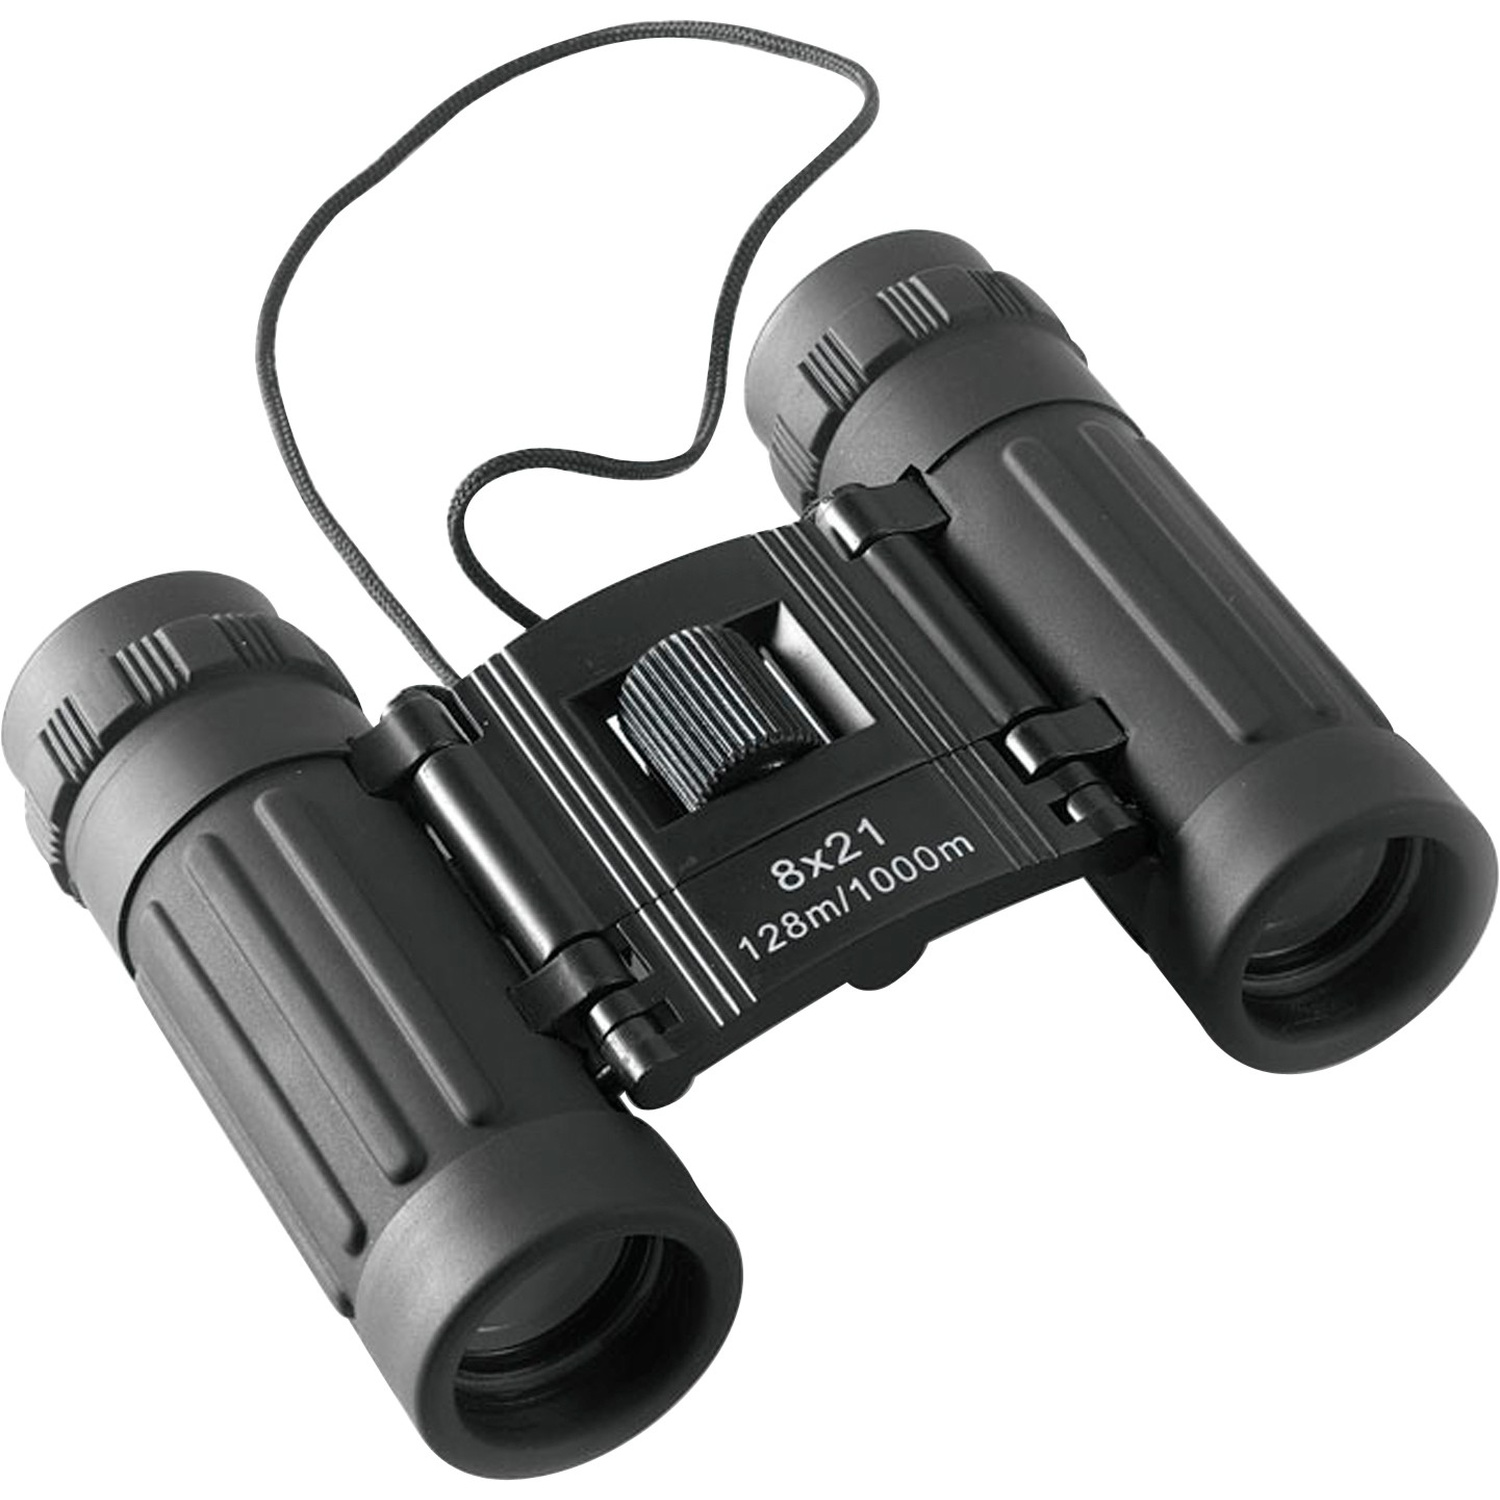 003786 001999999 3d135 top pro01 fal - Binoculars